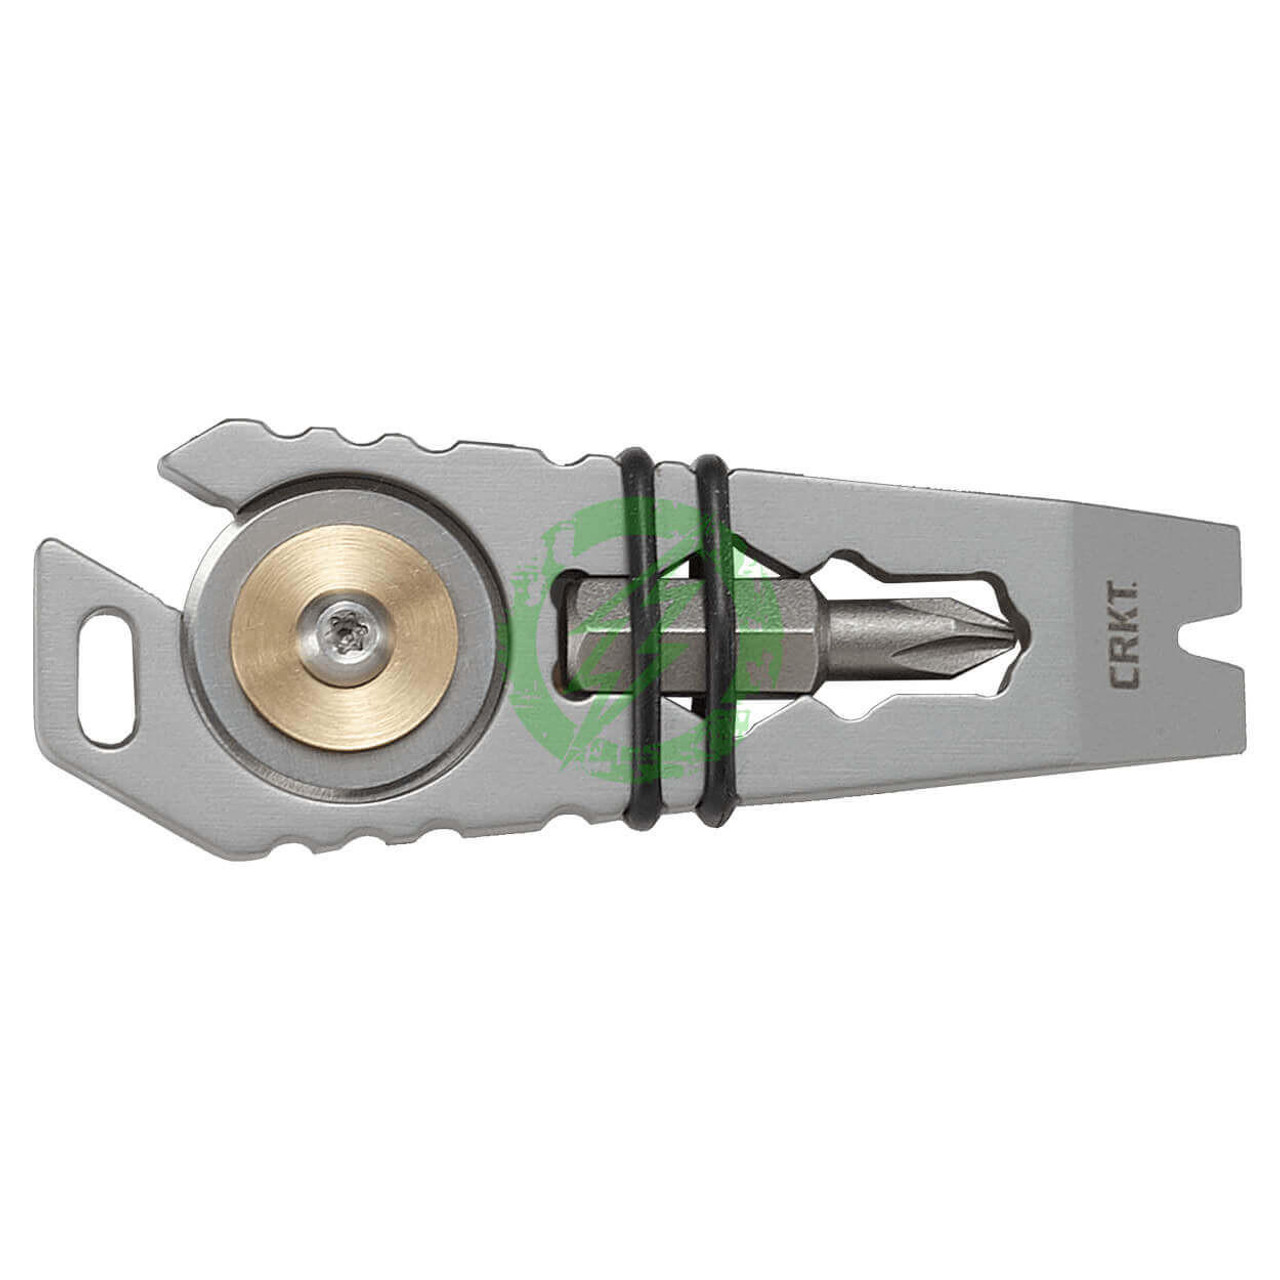 CRKT (Columbia River Knife Tool) CRKT Pry Bar Cutter Keychain Tool 